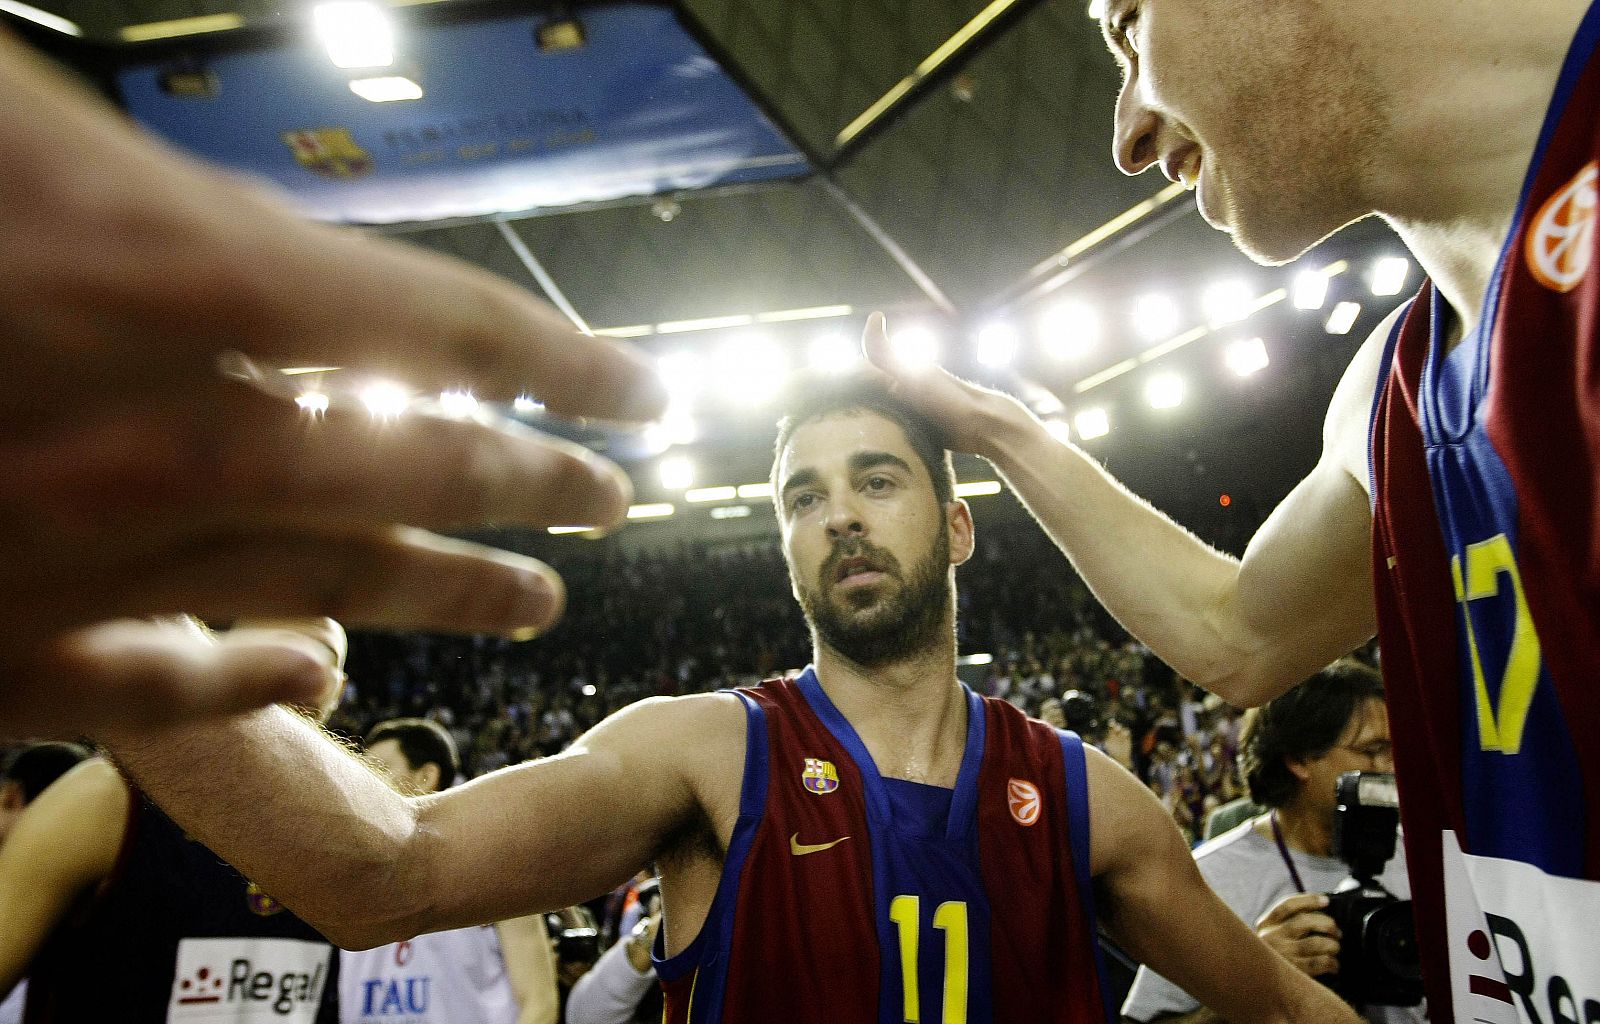 Barcelona's Navarro celebrates with teammates  victory against Tau Ceramica in Euroleague quarter-final basketball game in Barcelona